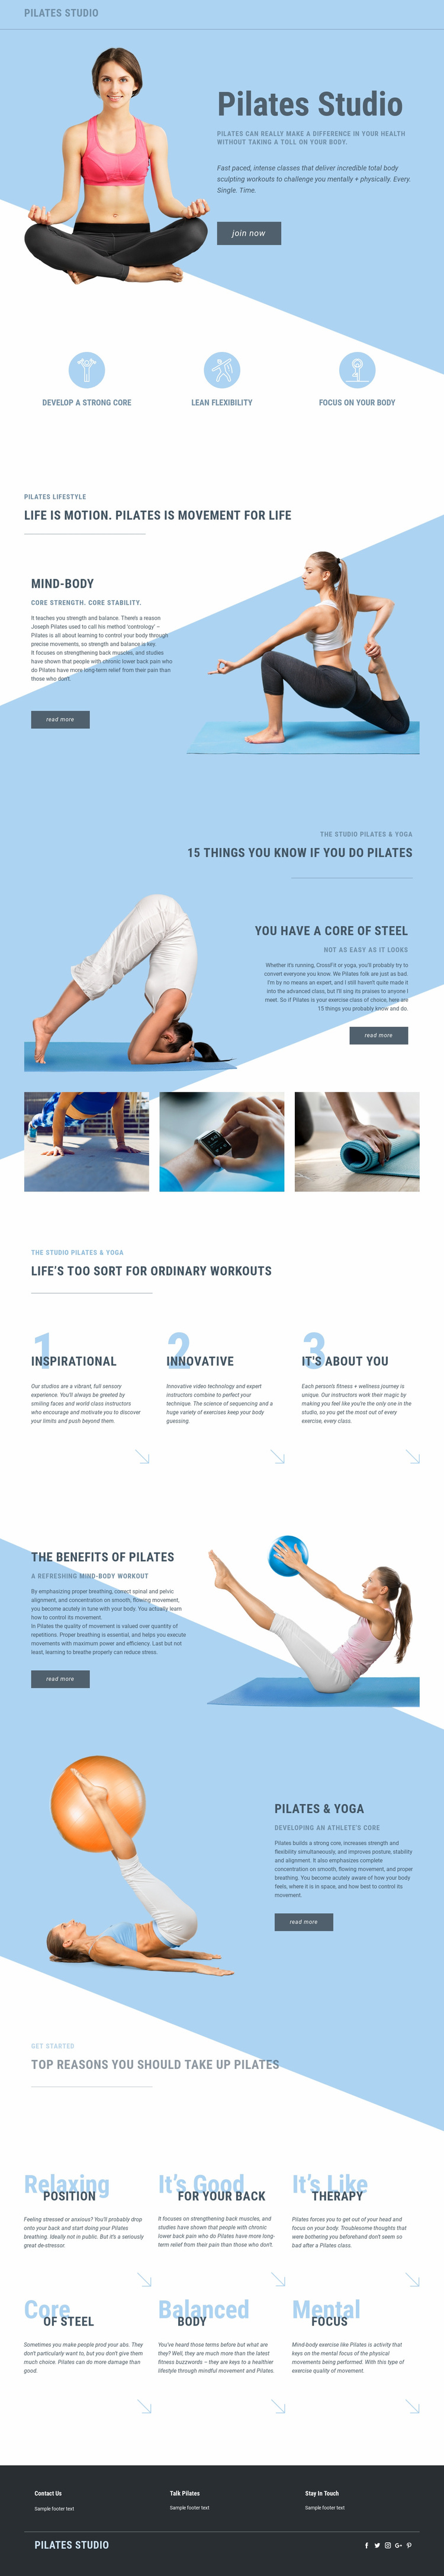 Pilates studio and sports Website Design